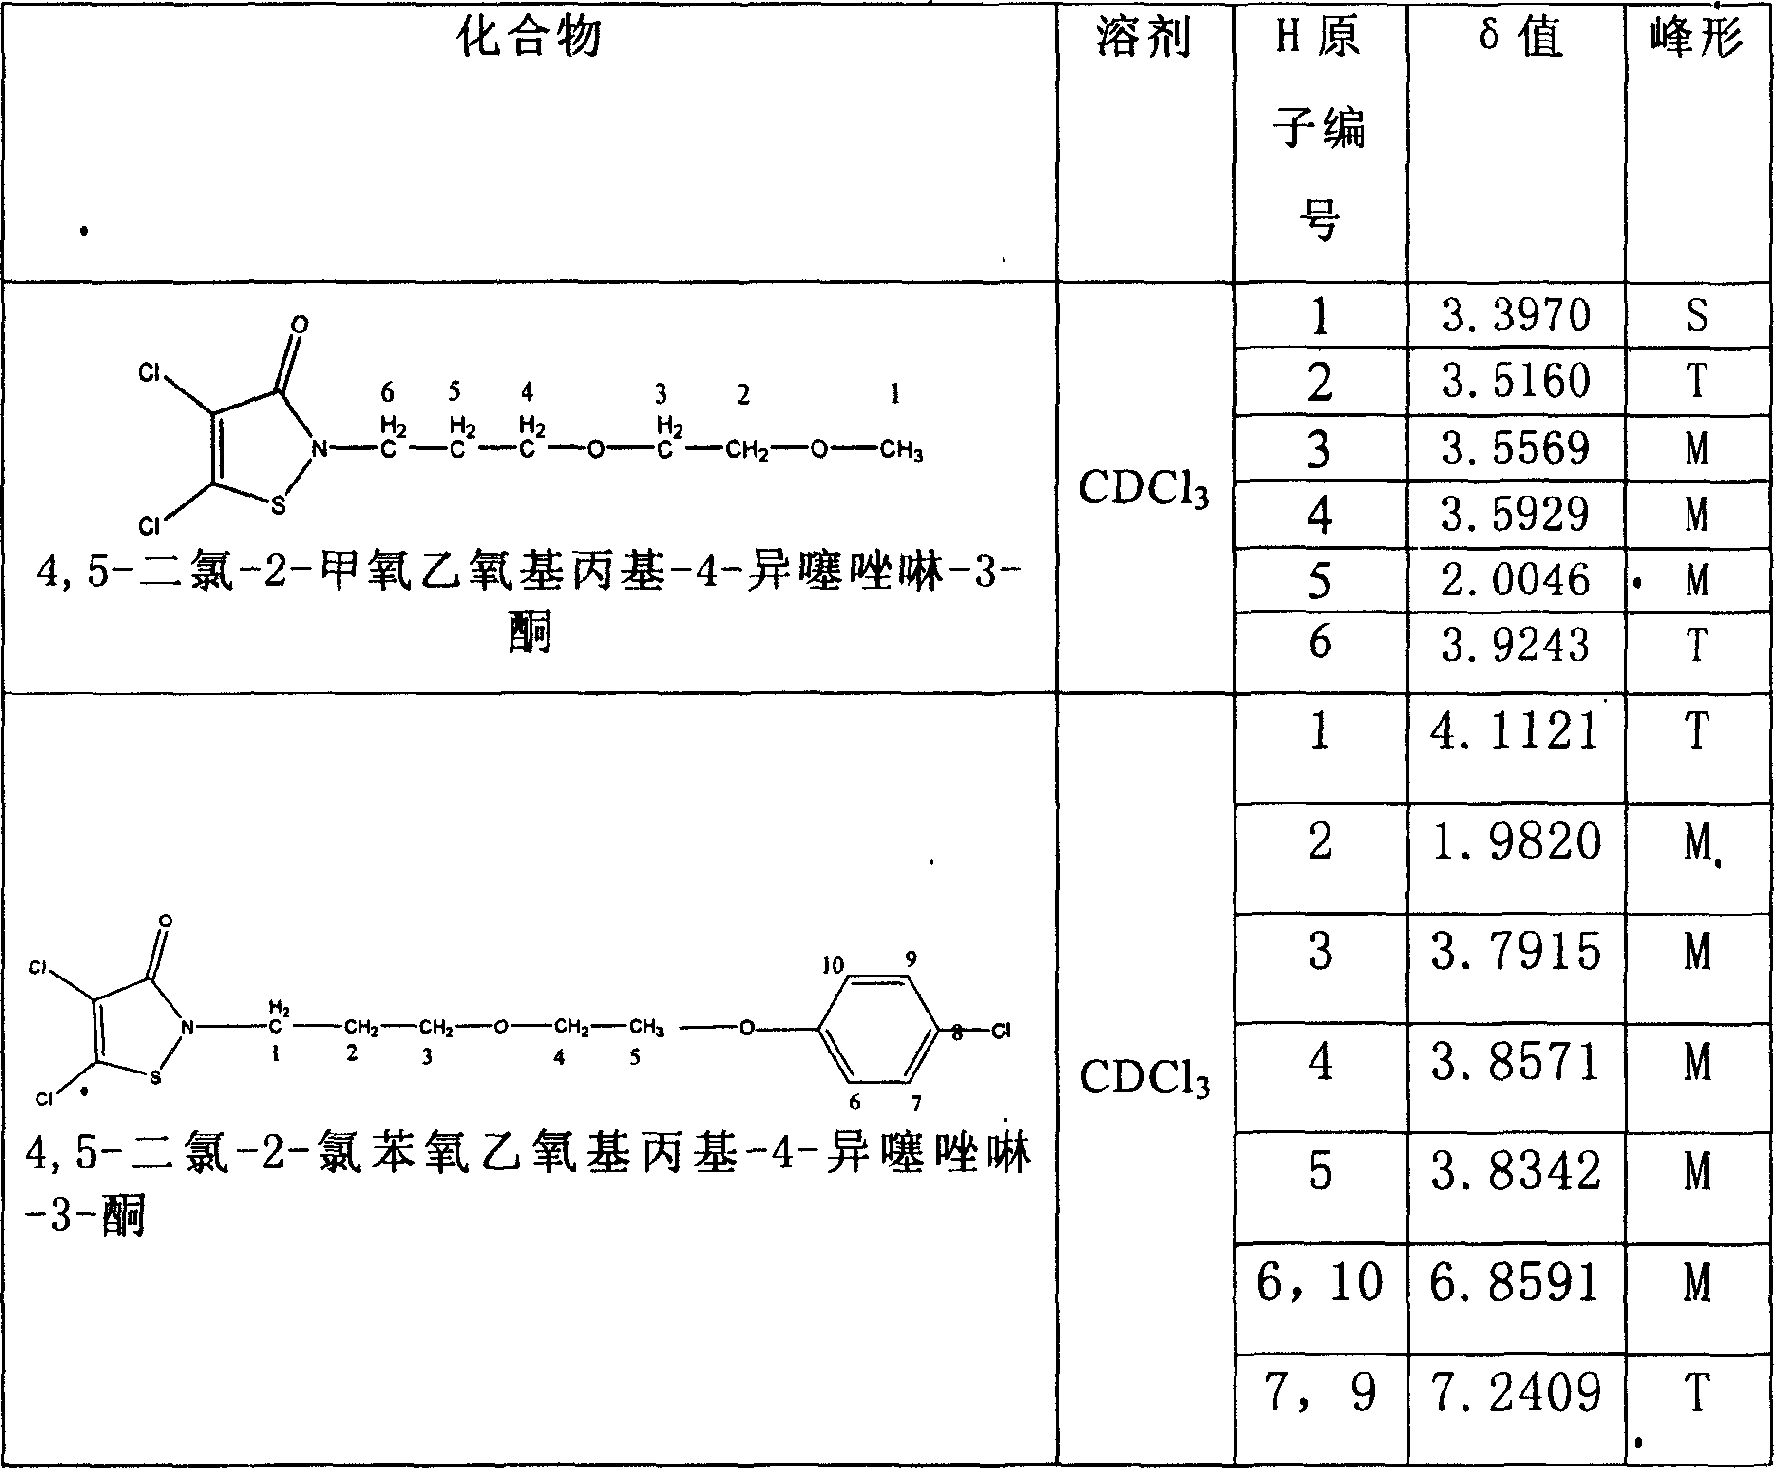 Alkoxy ethoxy propyl isothiazolinone and its preparation process and use